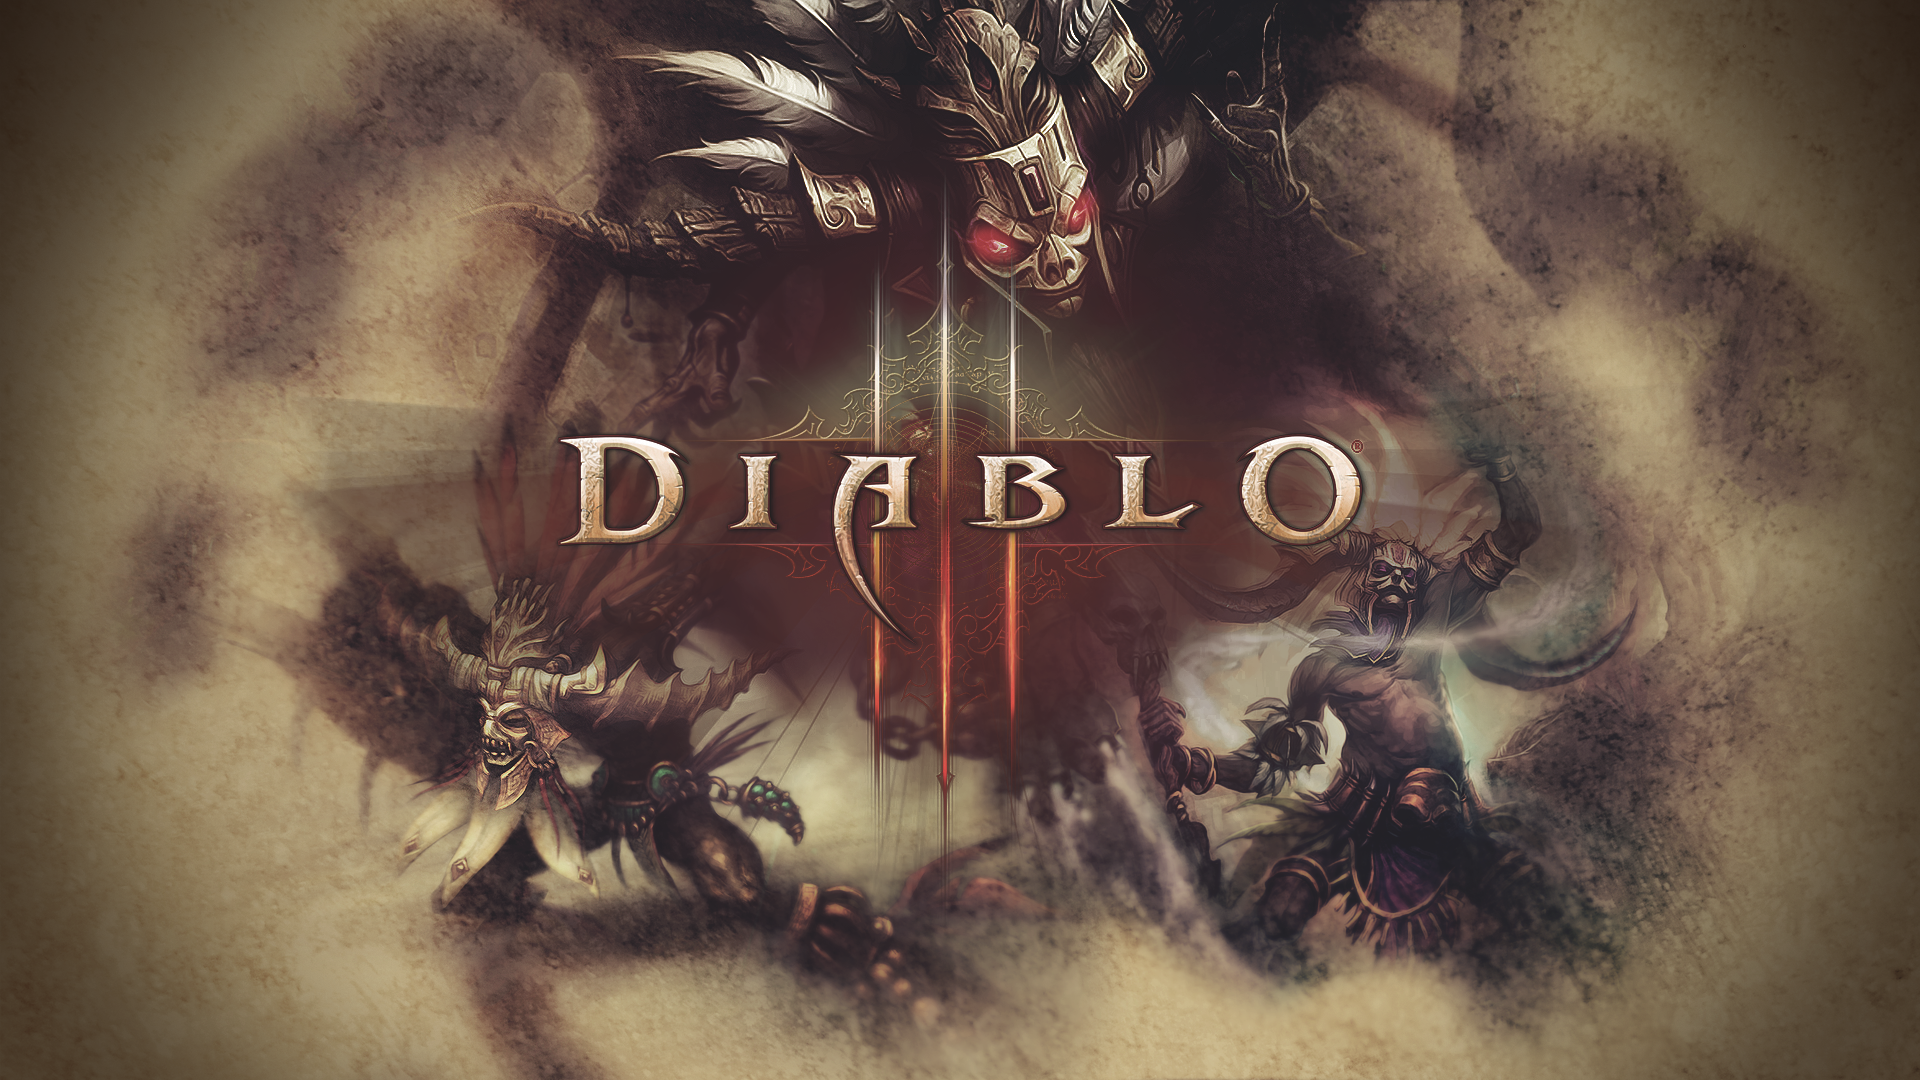 General 1920x1080 Diablo III video games video game art fantasy art Blizzard Entertainment PC gaming